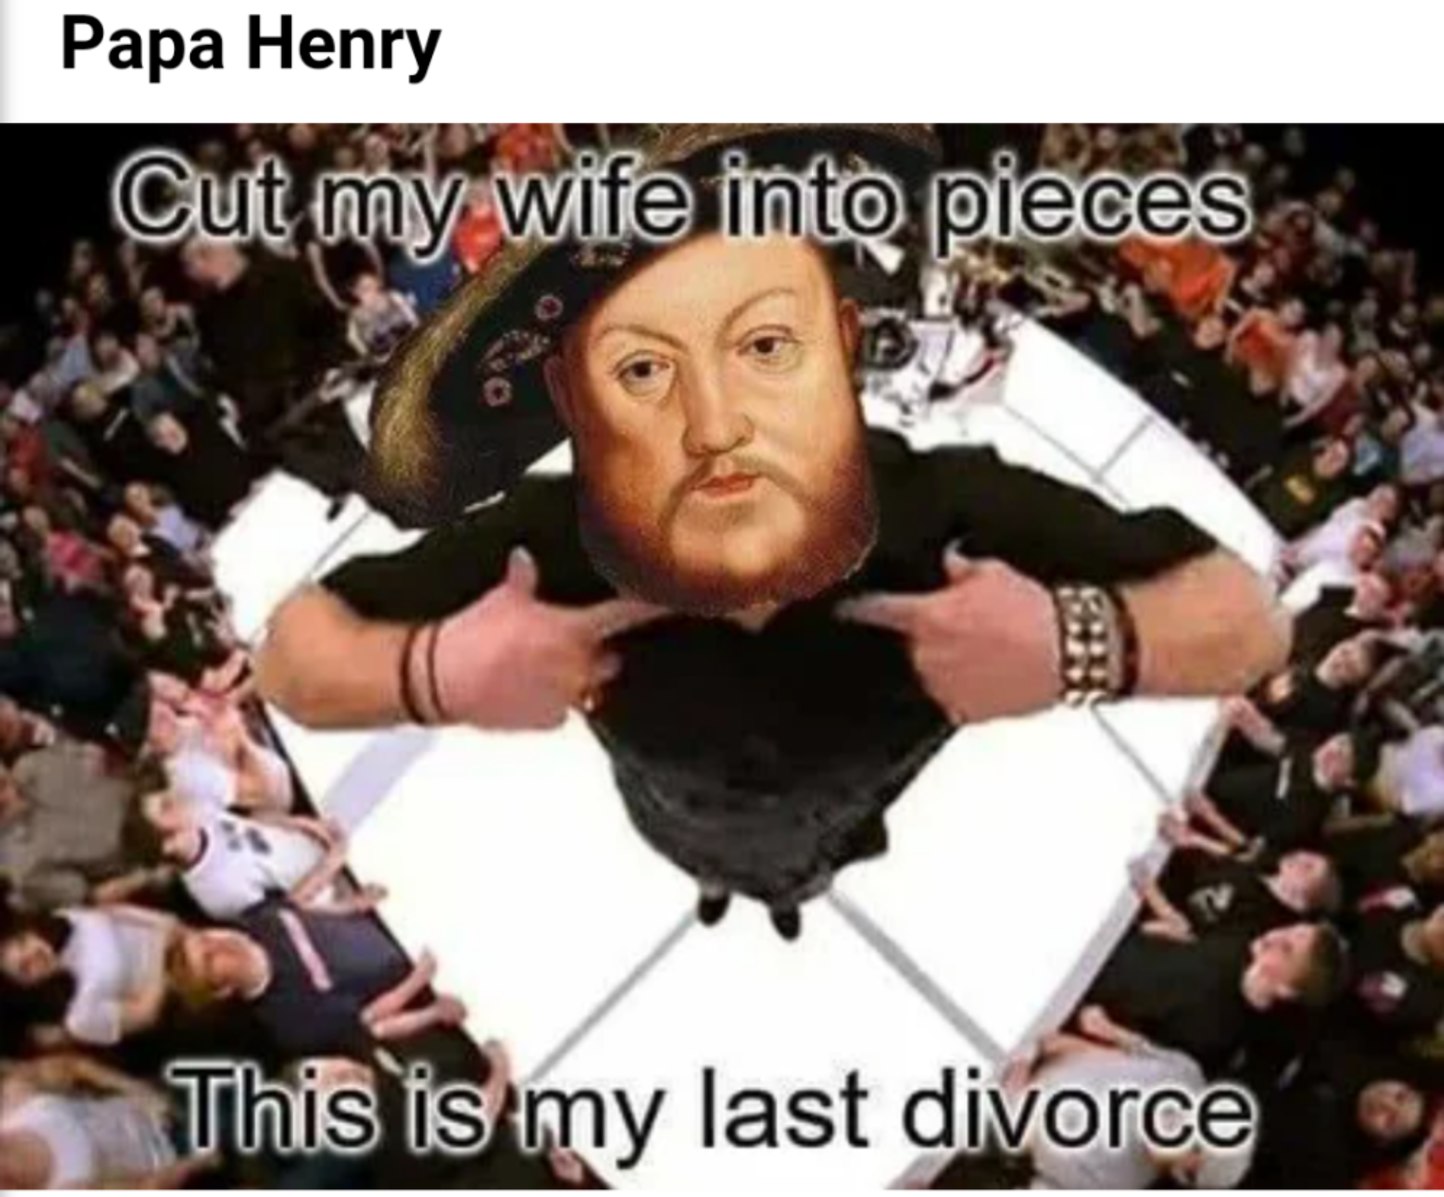 Divorce - meme